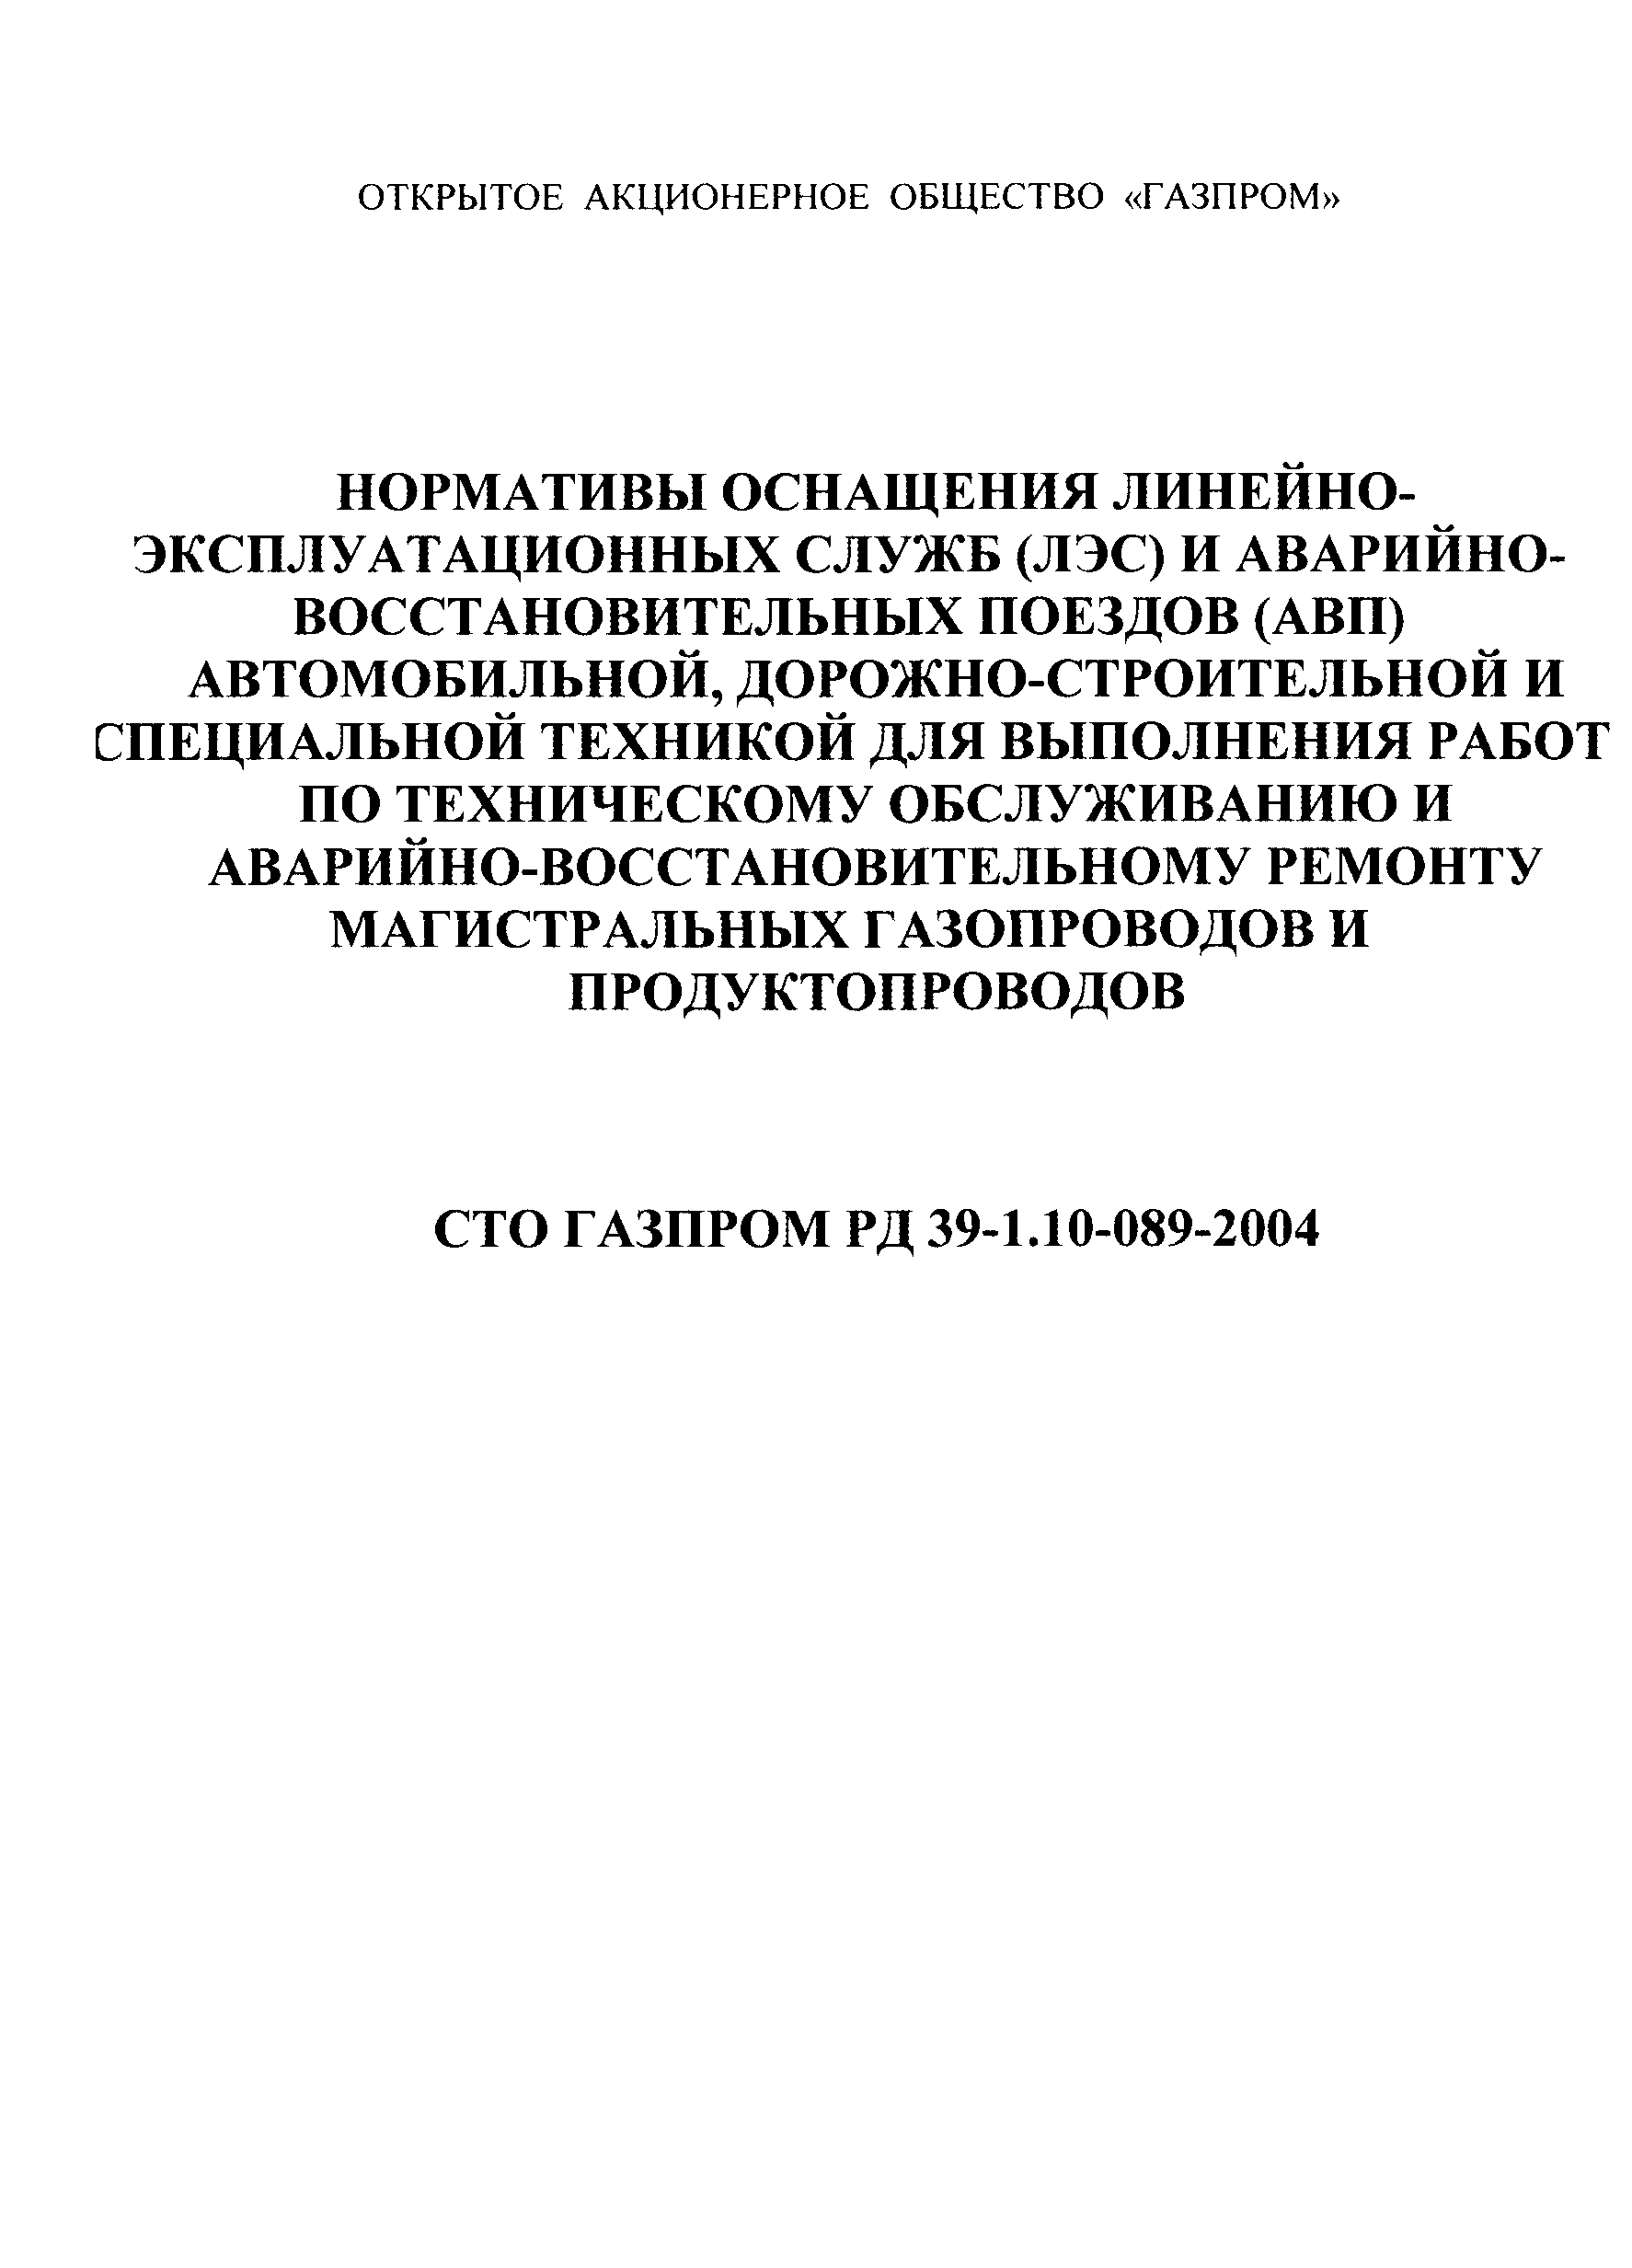 СТО Газпром РД 39-1.10-089-2004